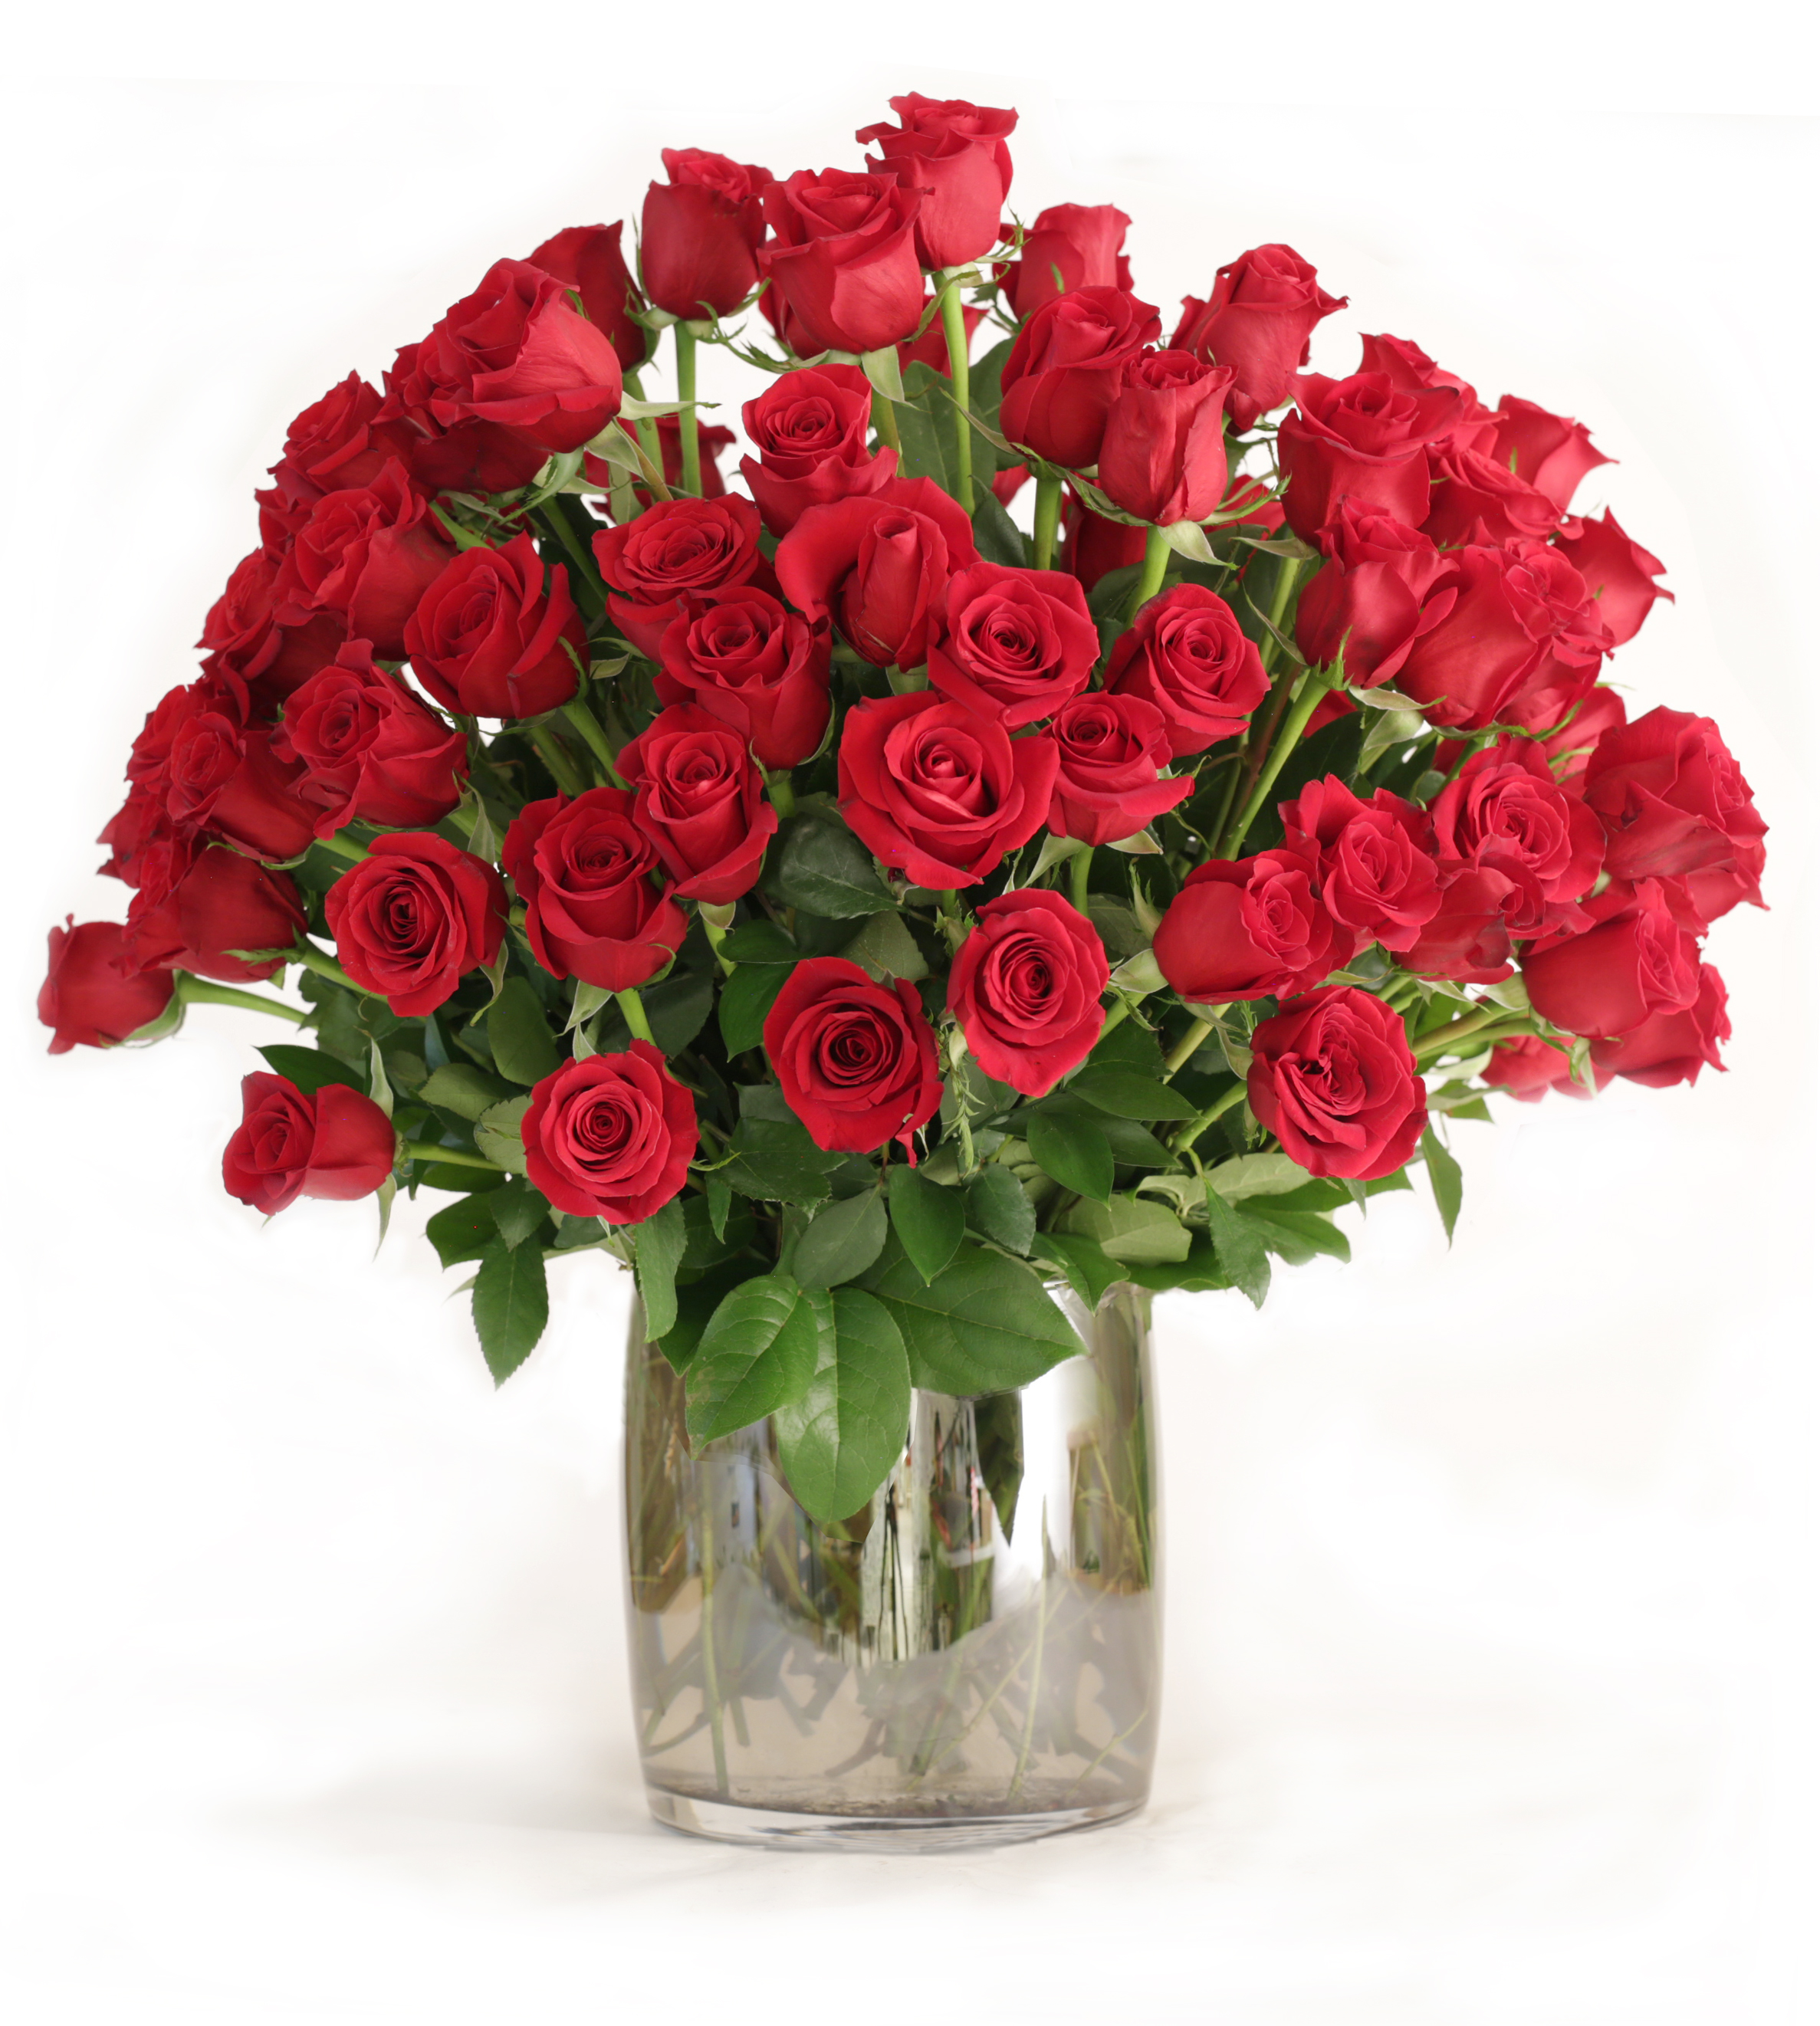 Love & Romance - One Hundred Rose Grand Gesture - #1 Florist in Central  Ohio - Flowerama Columbus - Same Day Flower Delivery » Flowerama Columbus